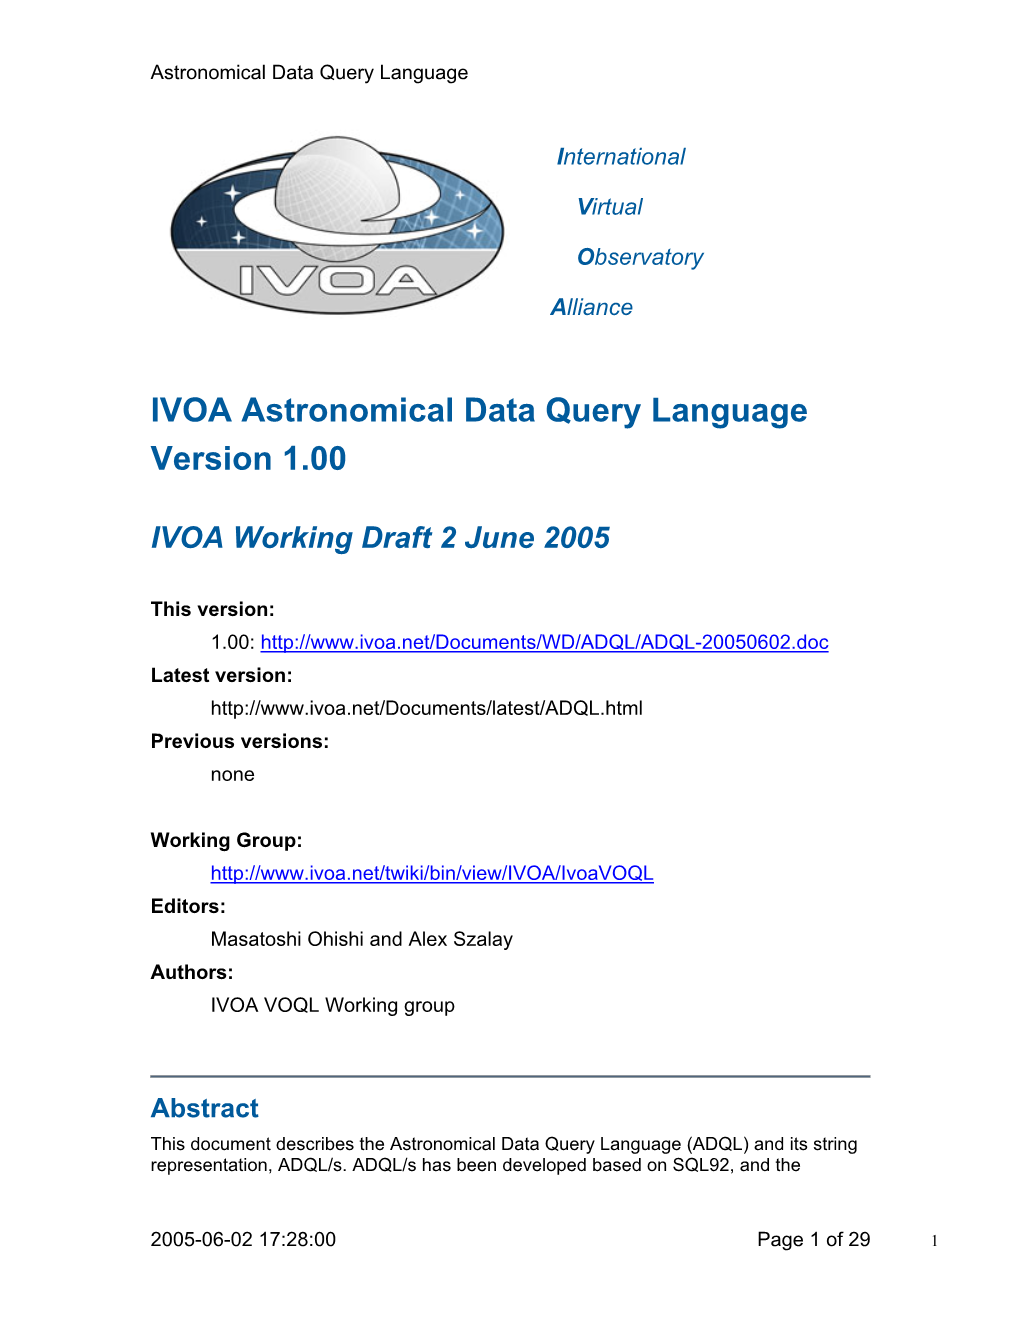 IVOA Astronomical Data Query Language Version 1.00